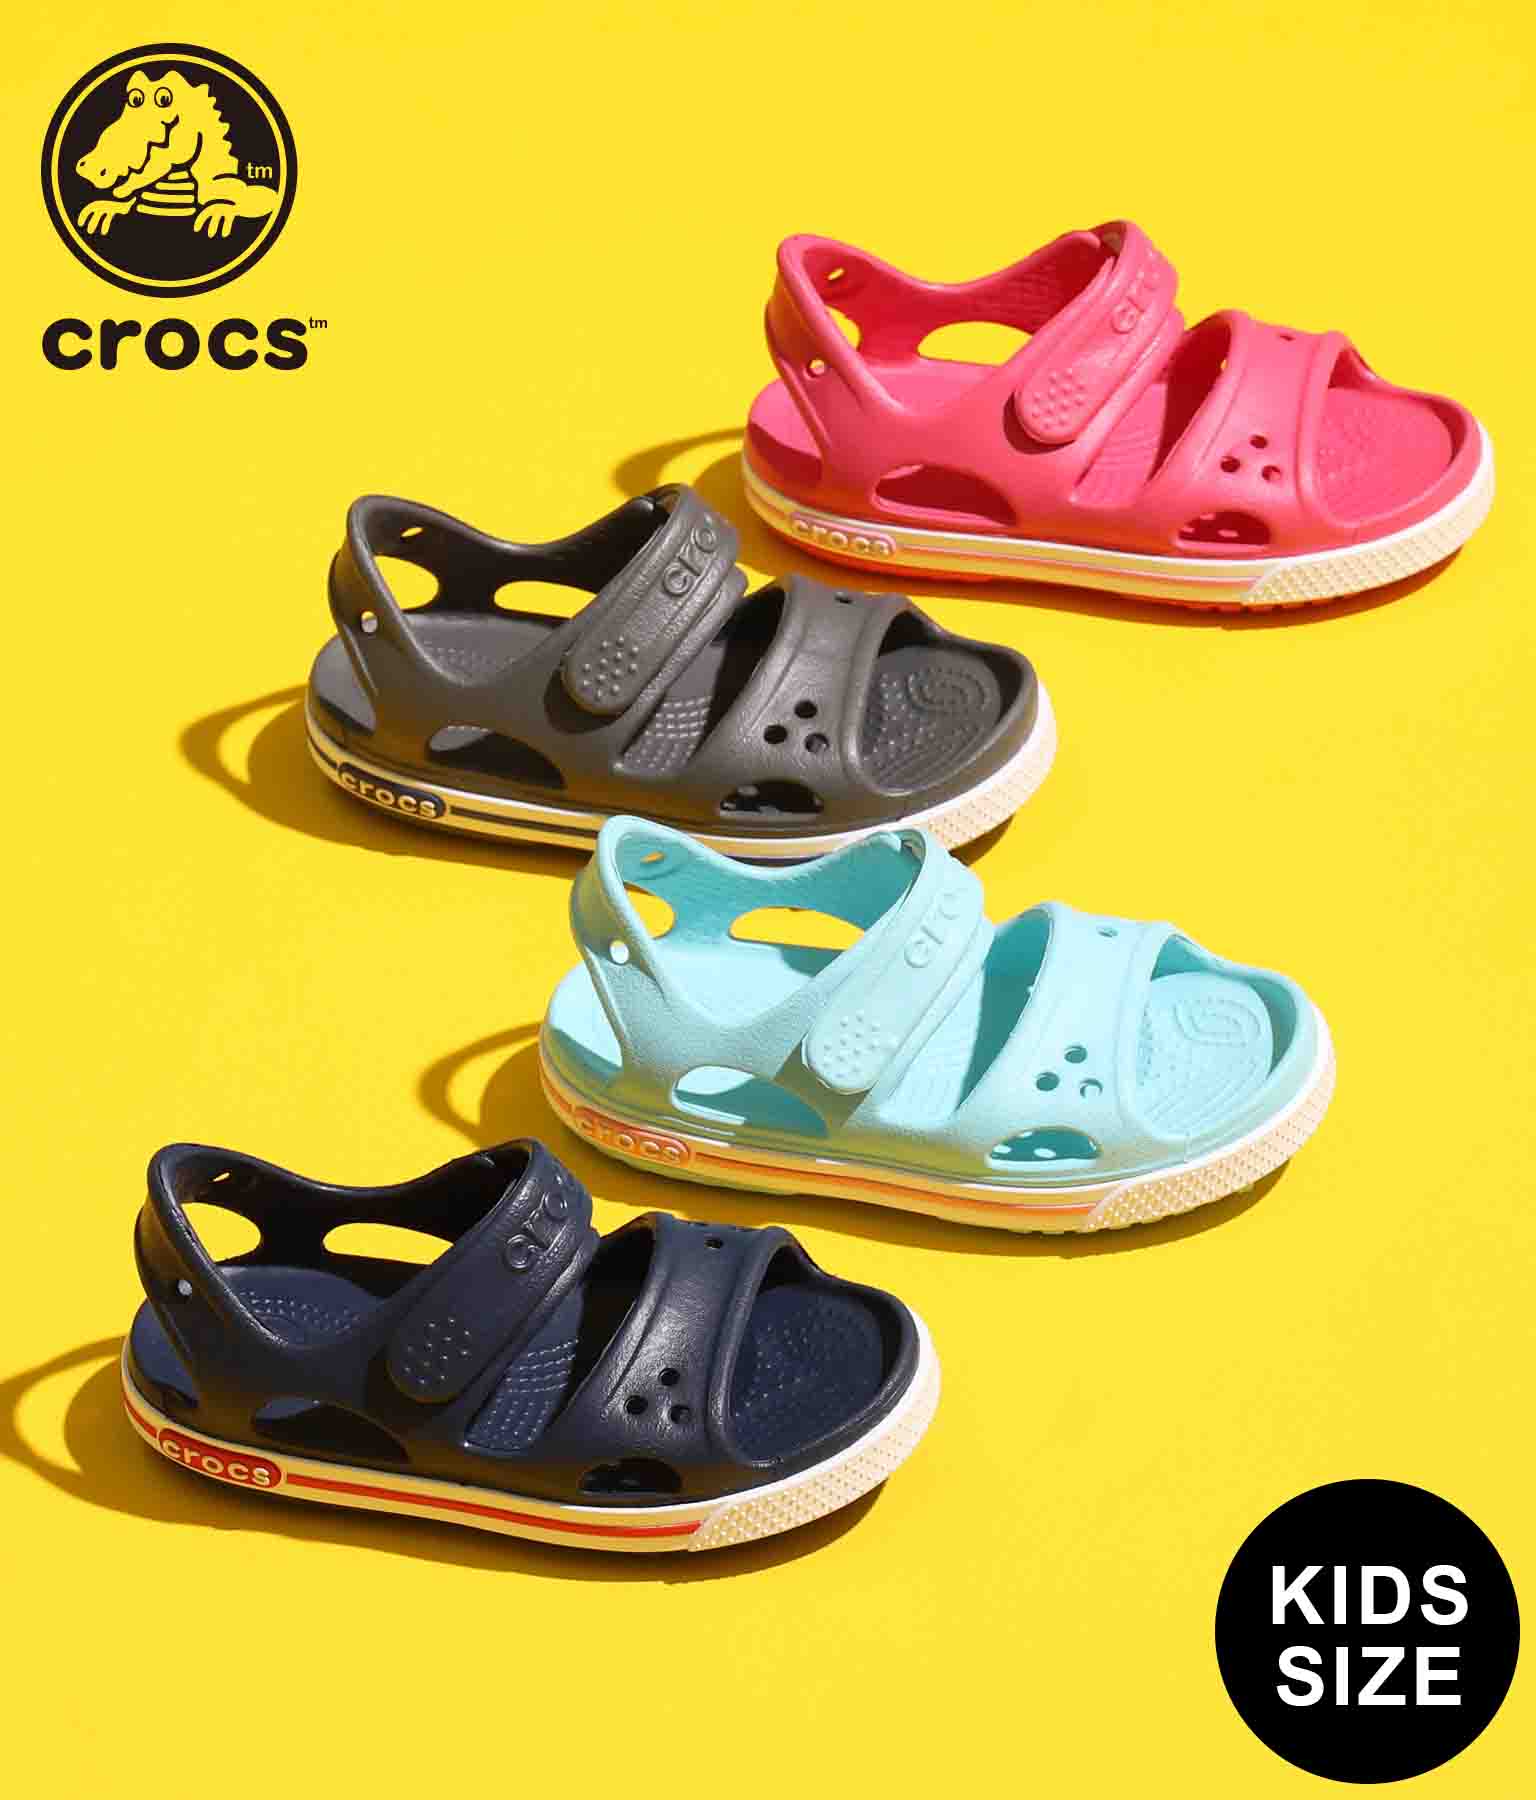 crocs for kids size 1